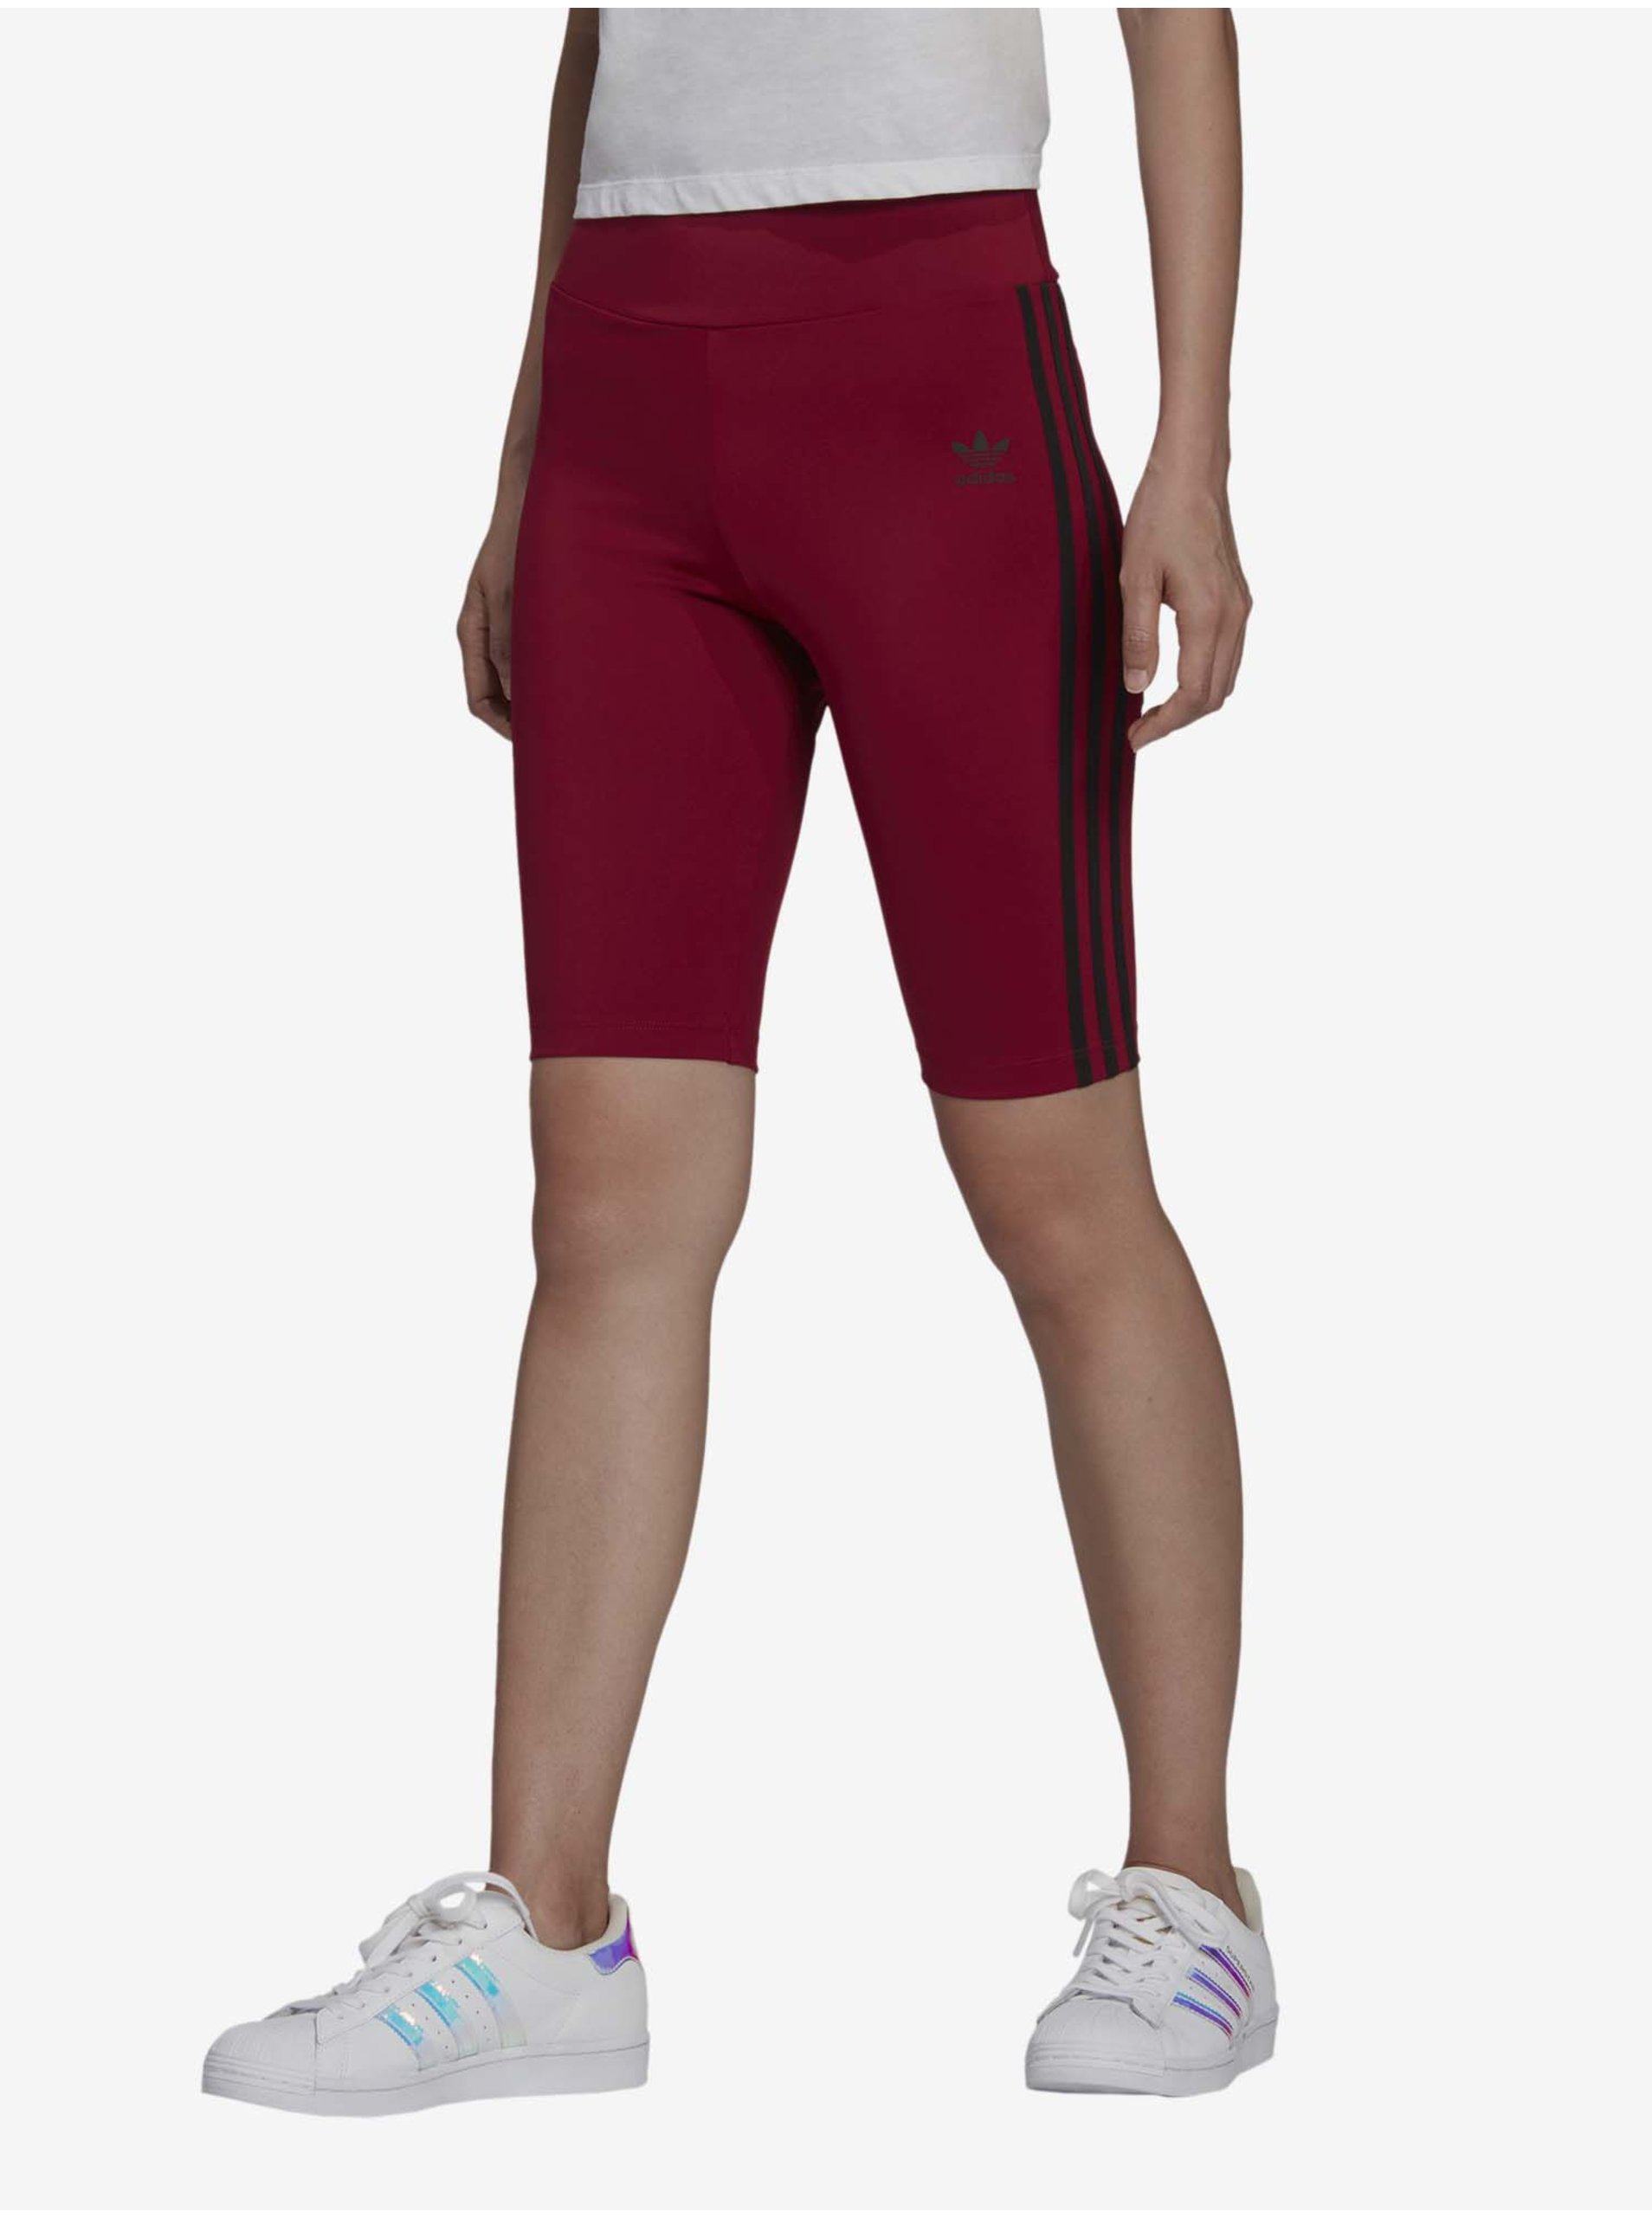 Women's Wine Shorts adidas Originals - Women